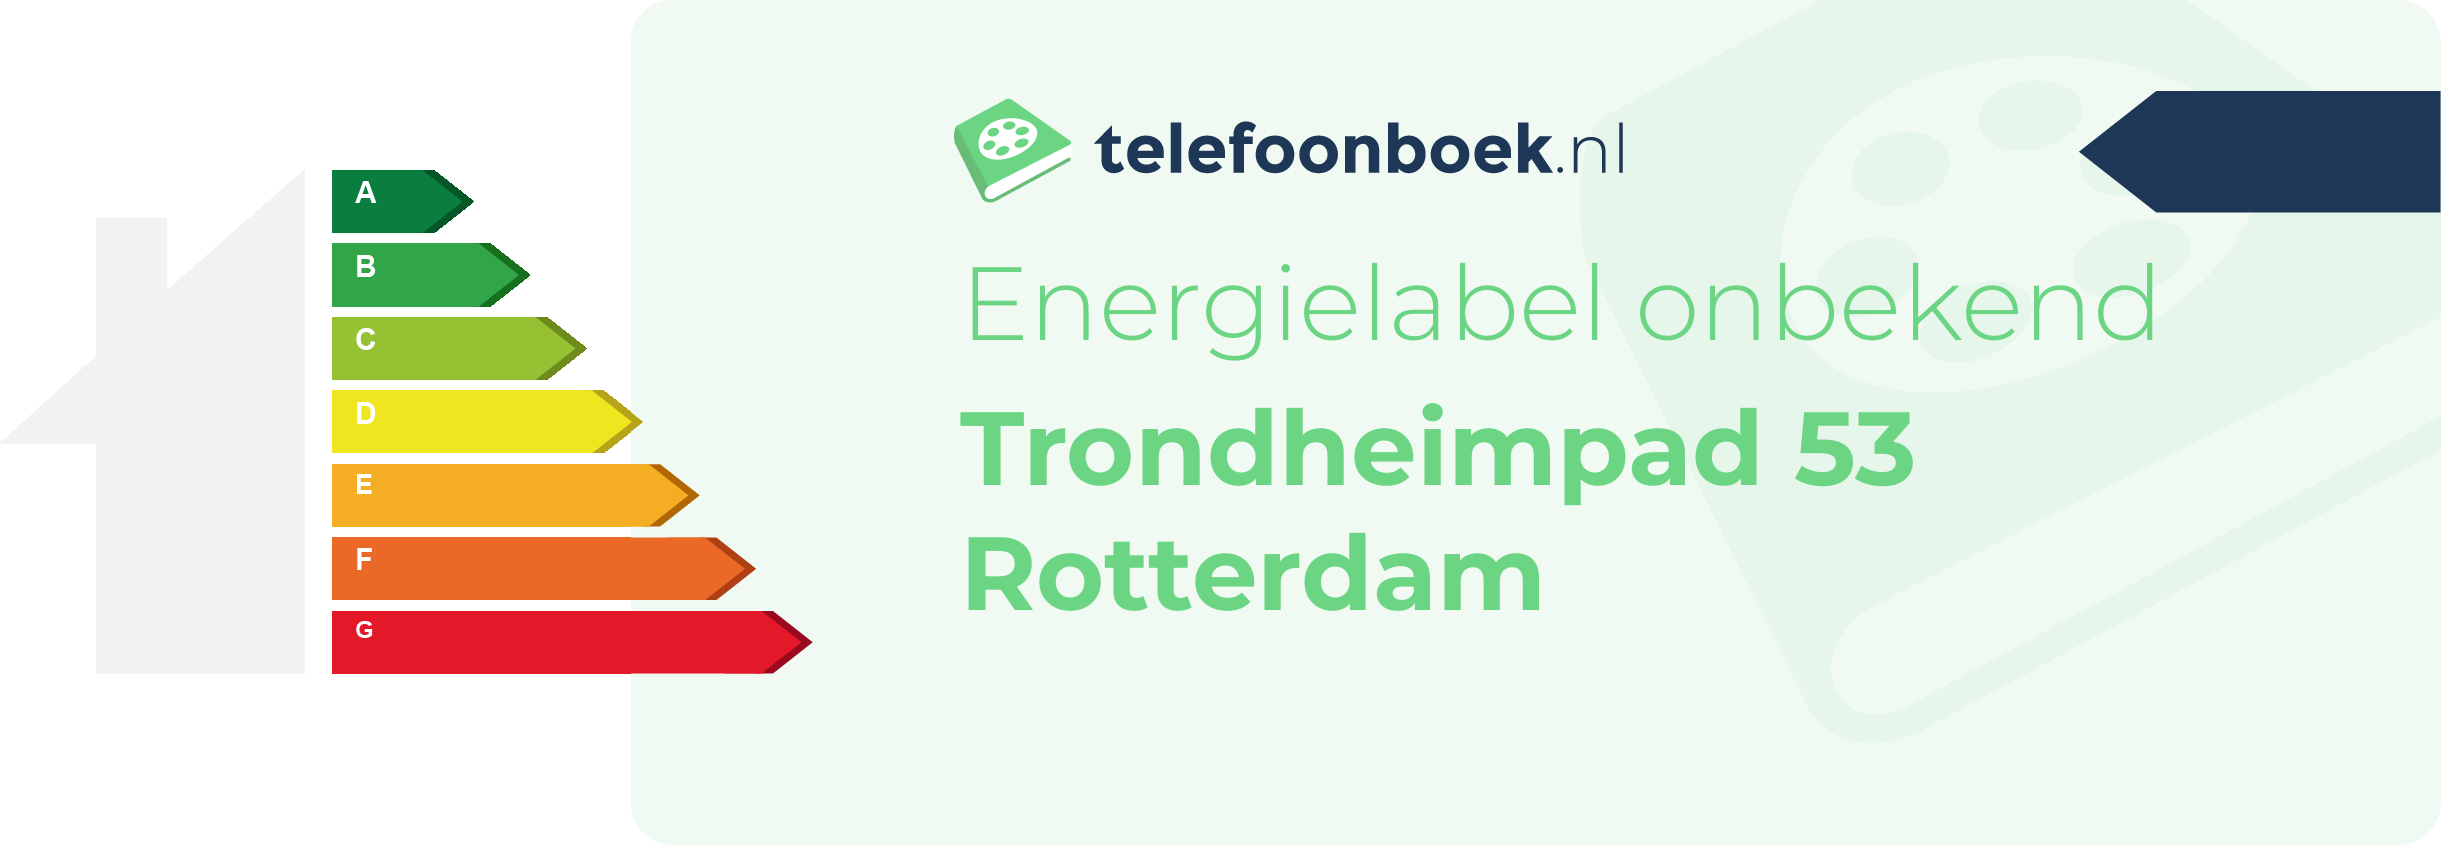 Energielabel Trondheimpad 53 Rotterdam